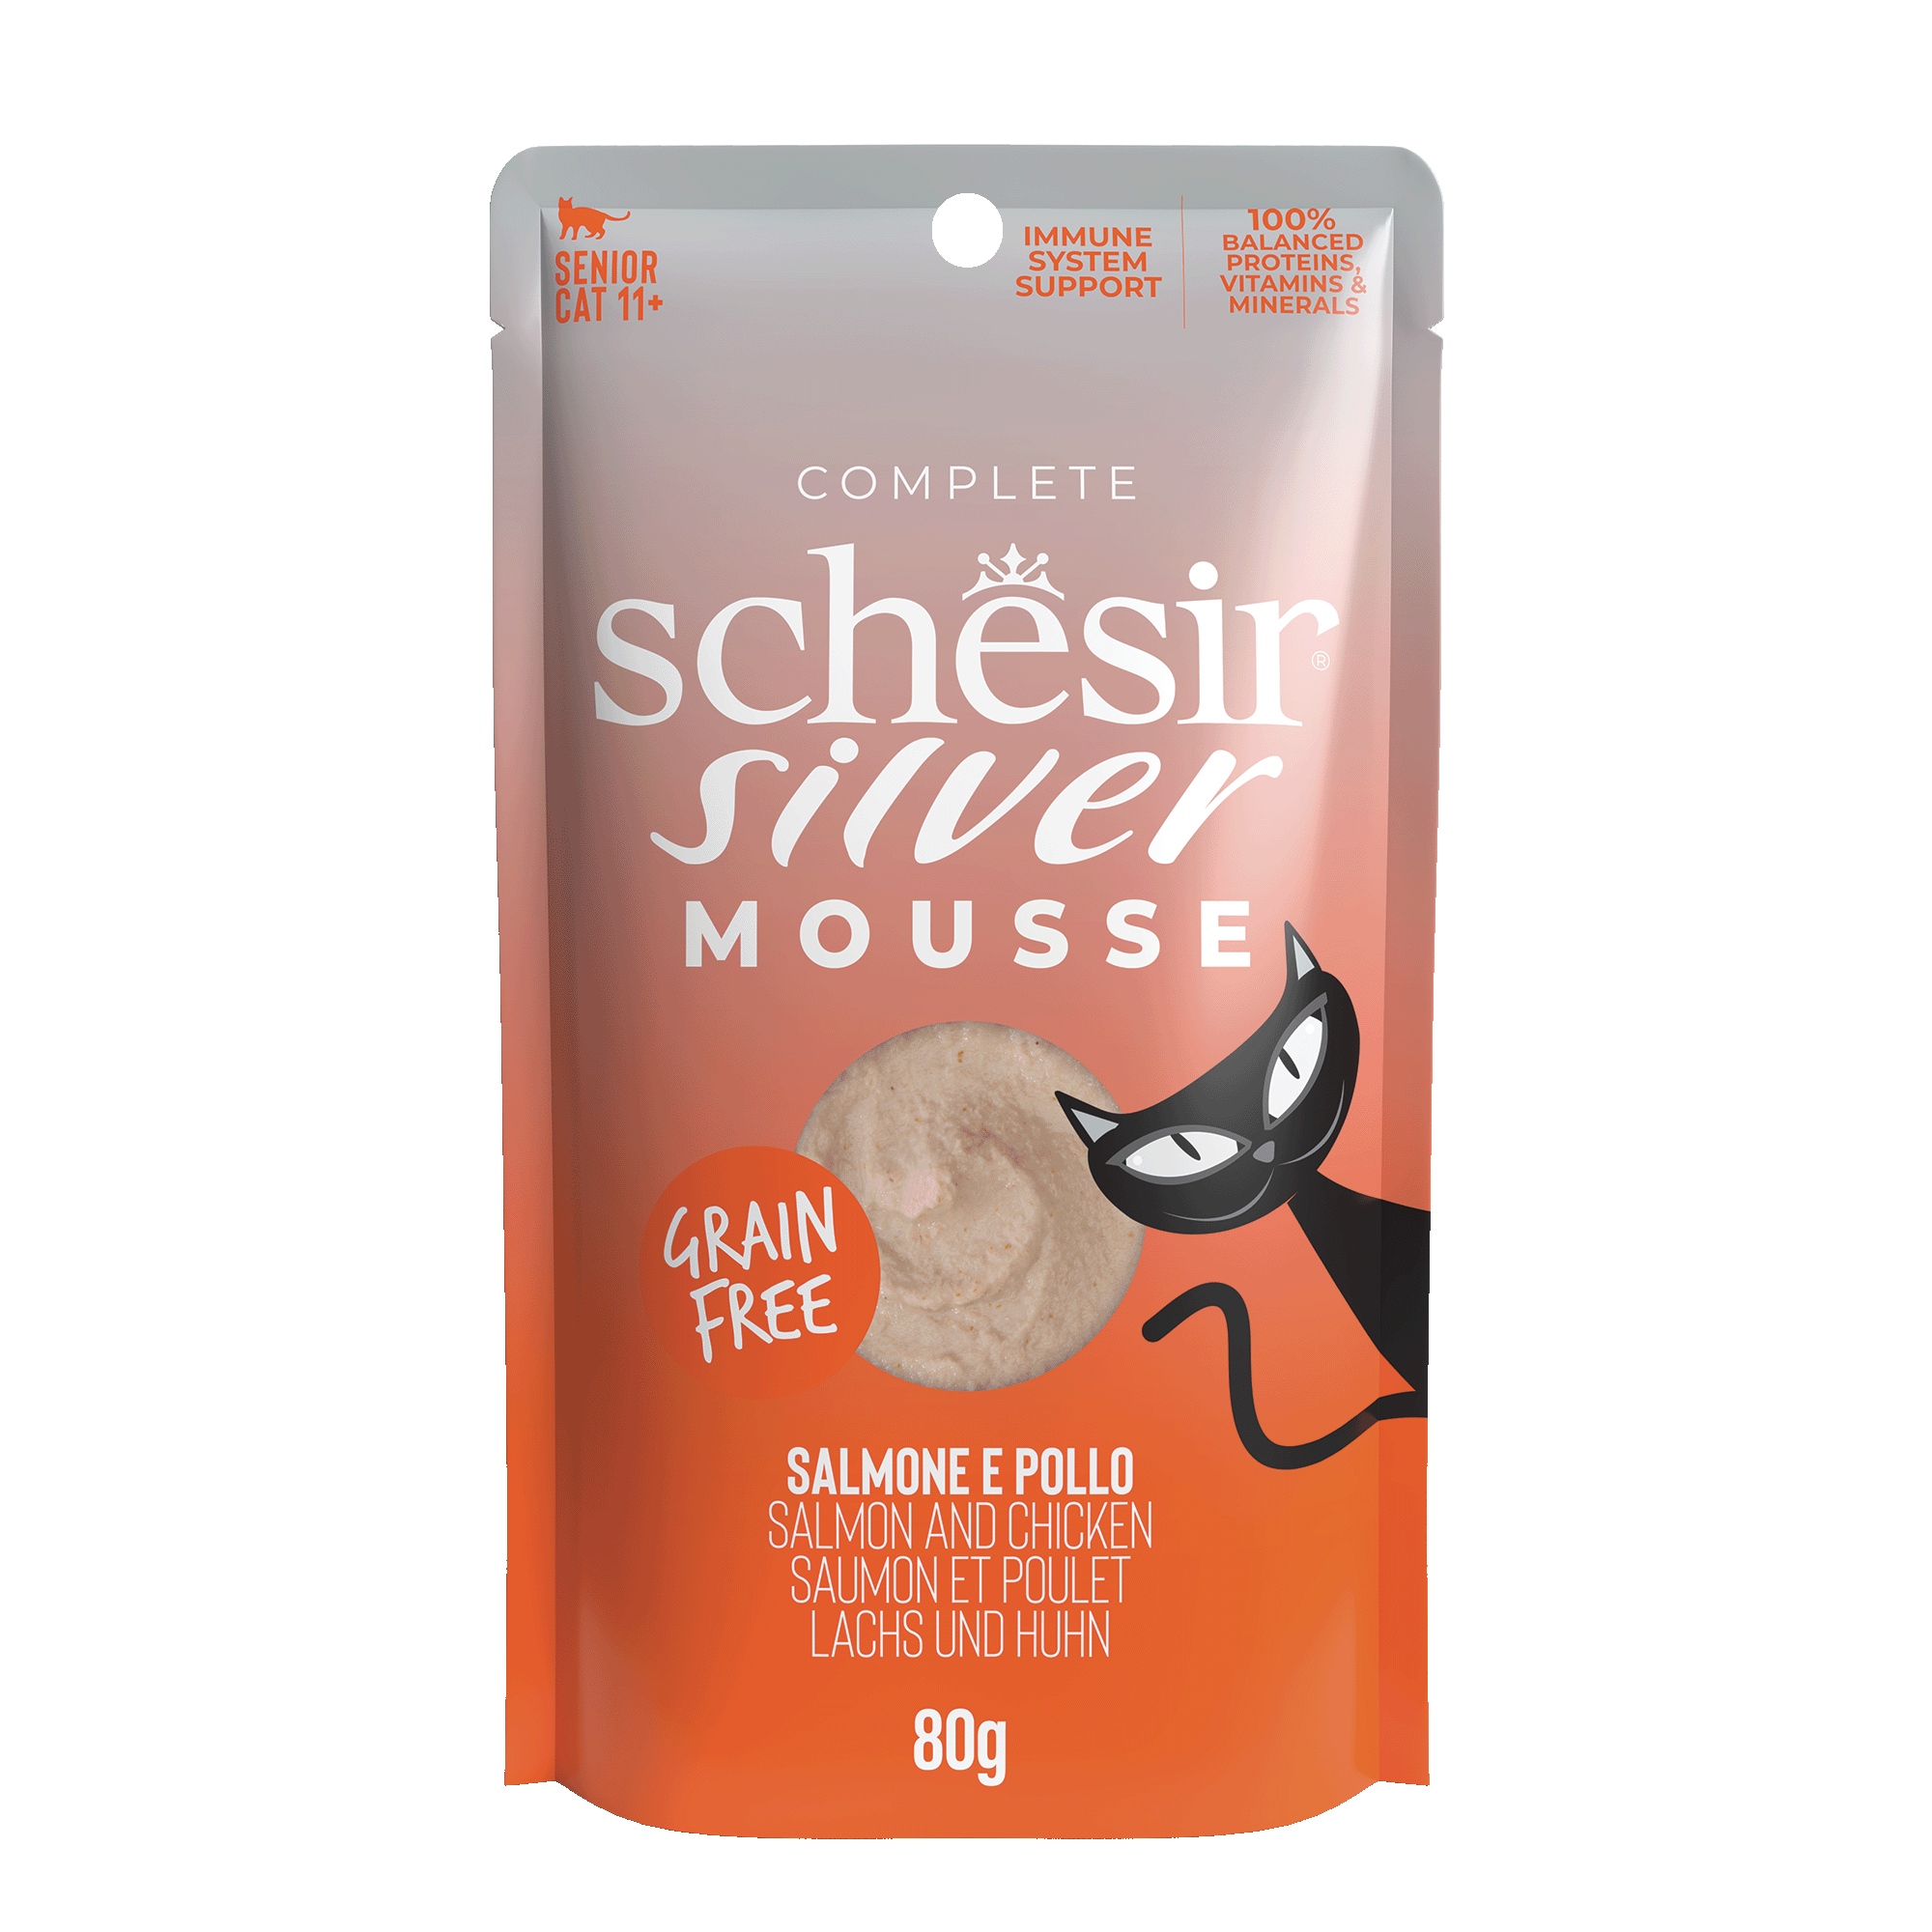 SCCHESIR Senior Lifestage Velvet Mousse per gatti anziani - 2 gusti tra cui scegliere